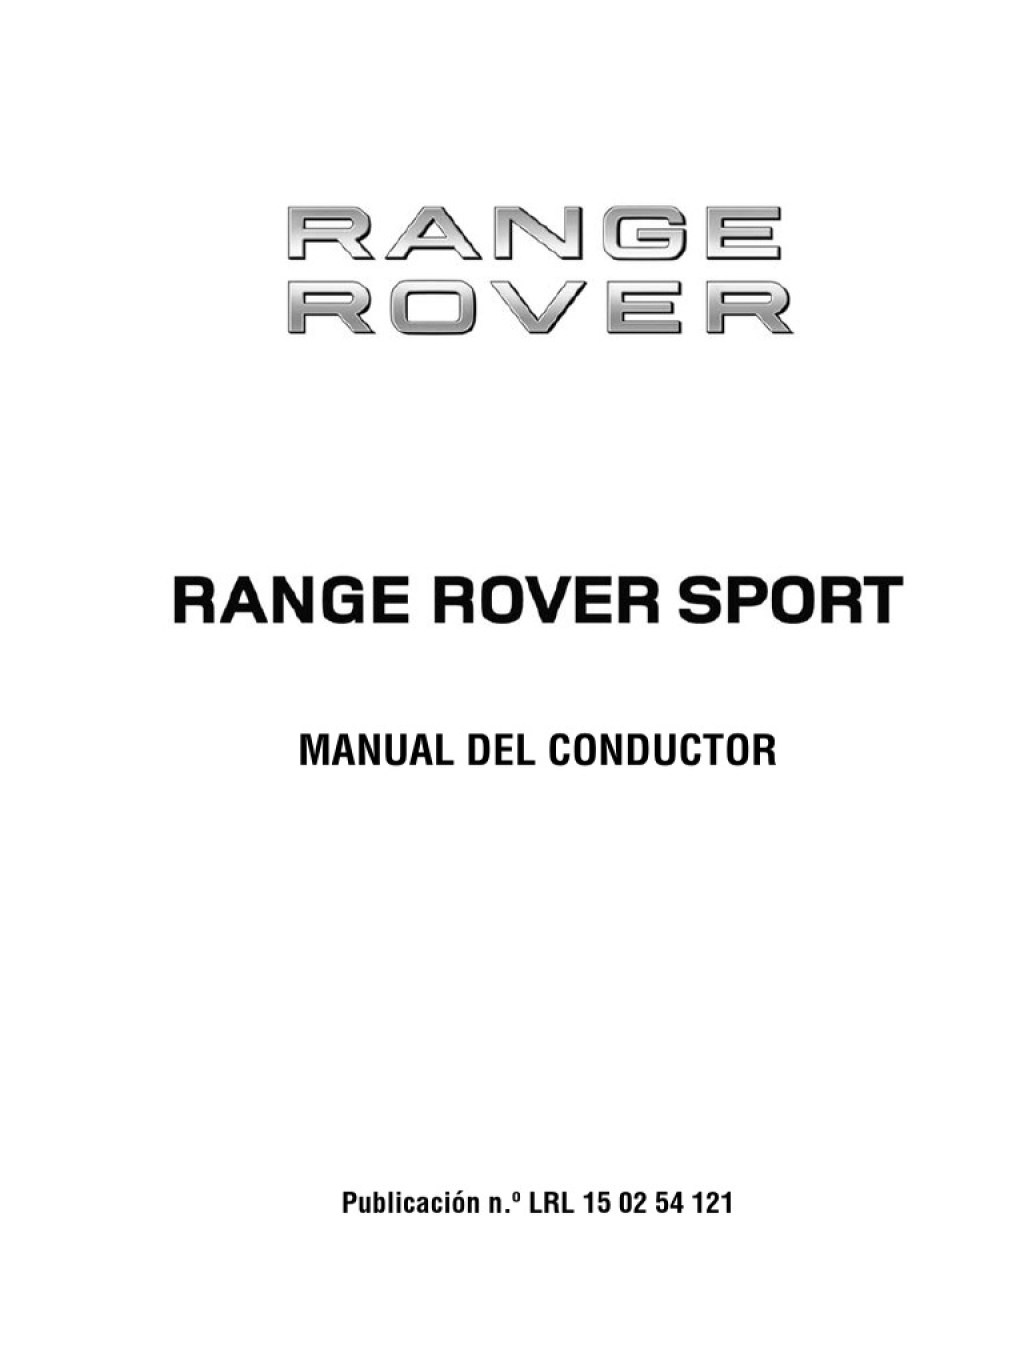 Picture of: L Range Rover Sport – Manual Usuario  ESpañol pág  PDF